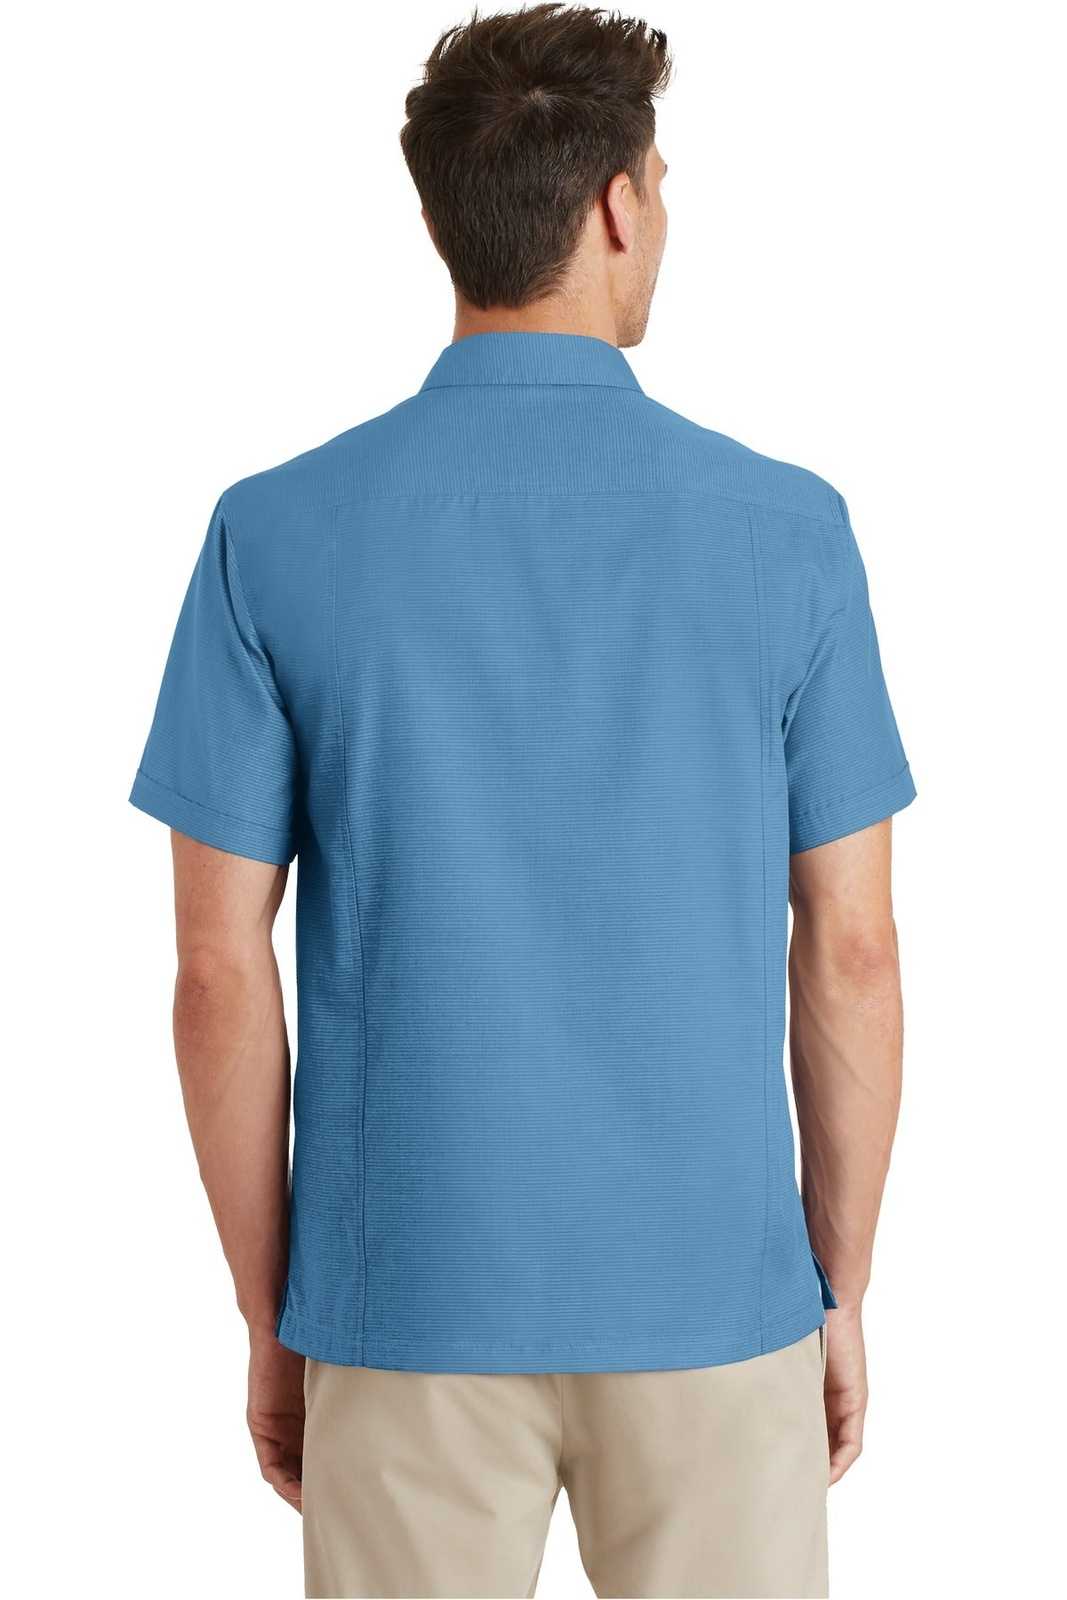 Port Authority S662 Textured Camp Shirt - Celadon - HIT a Double - 2